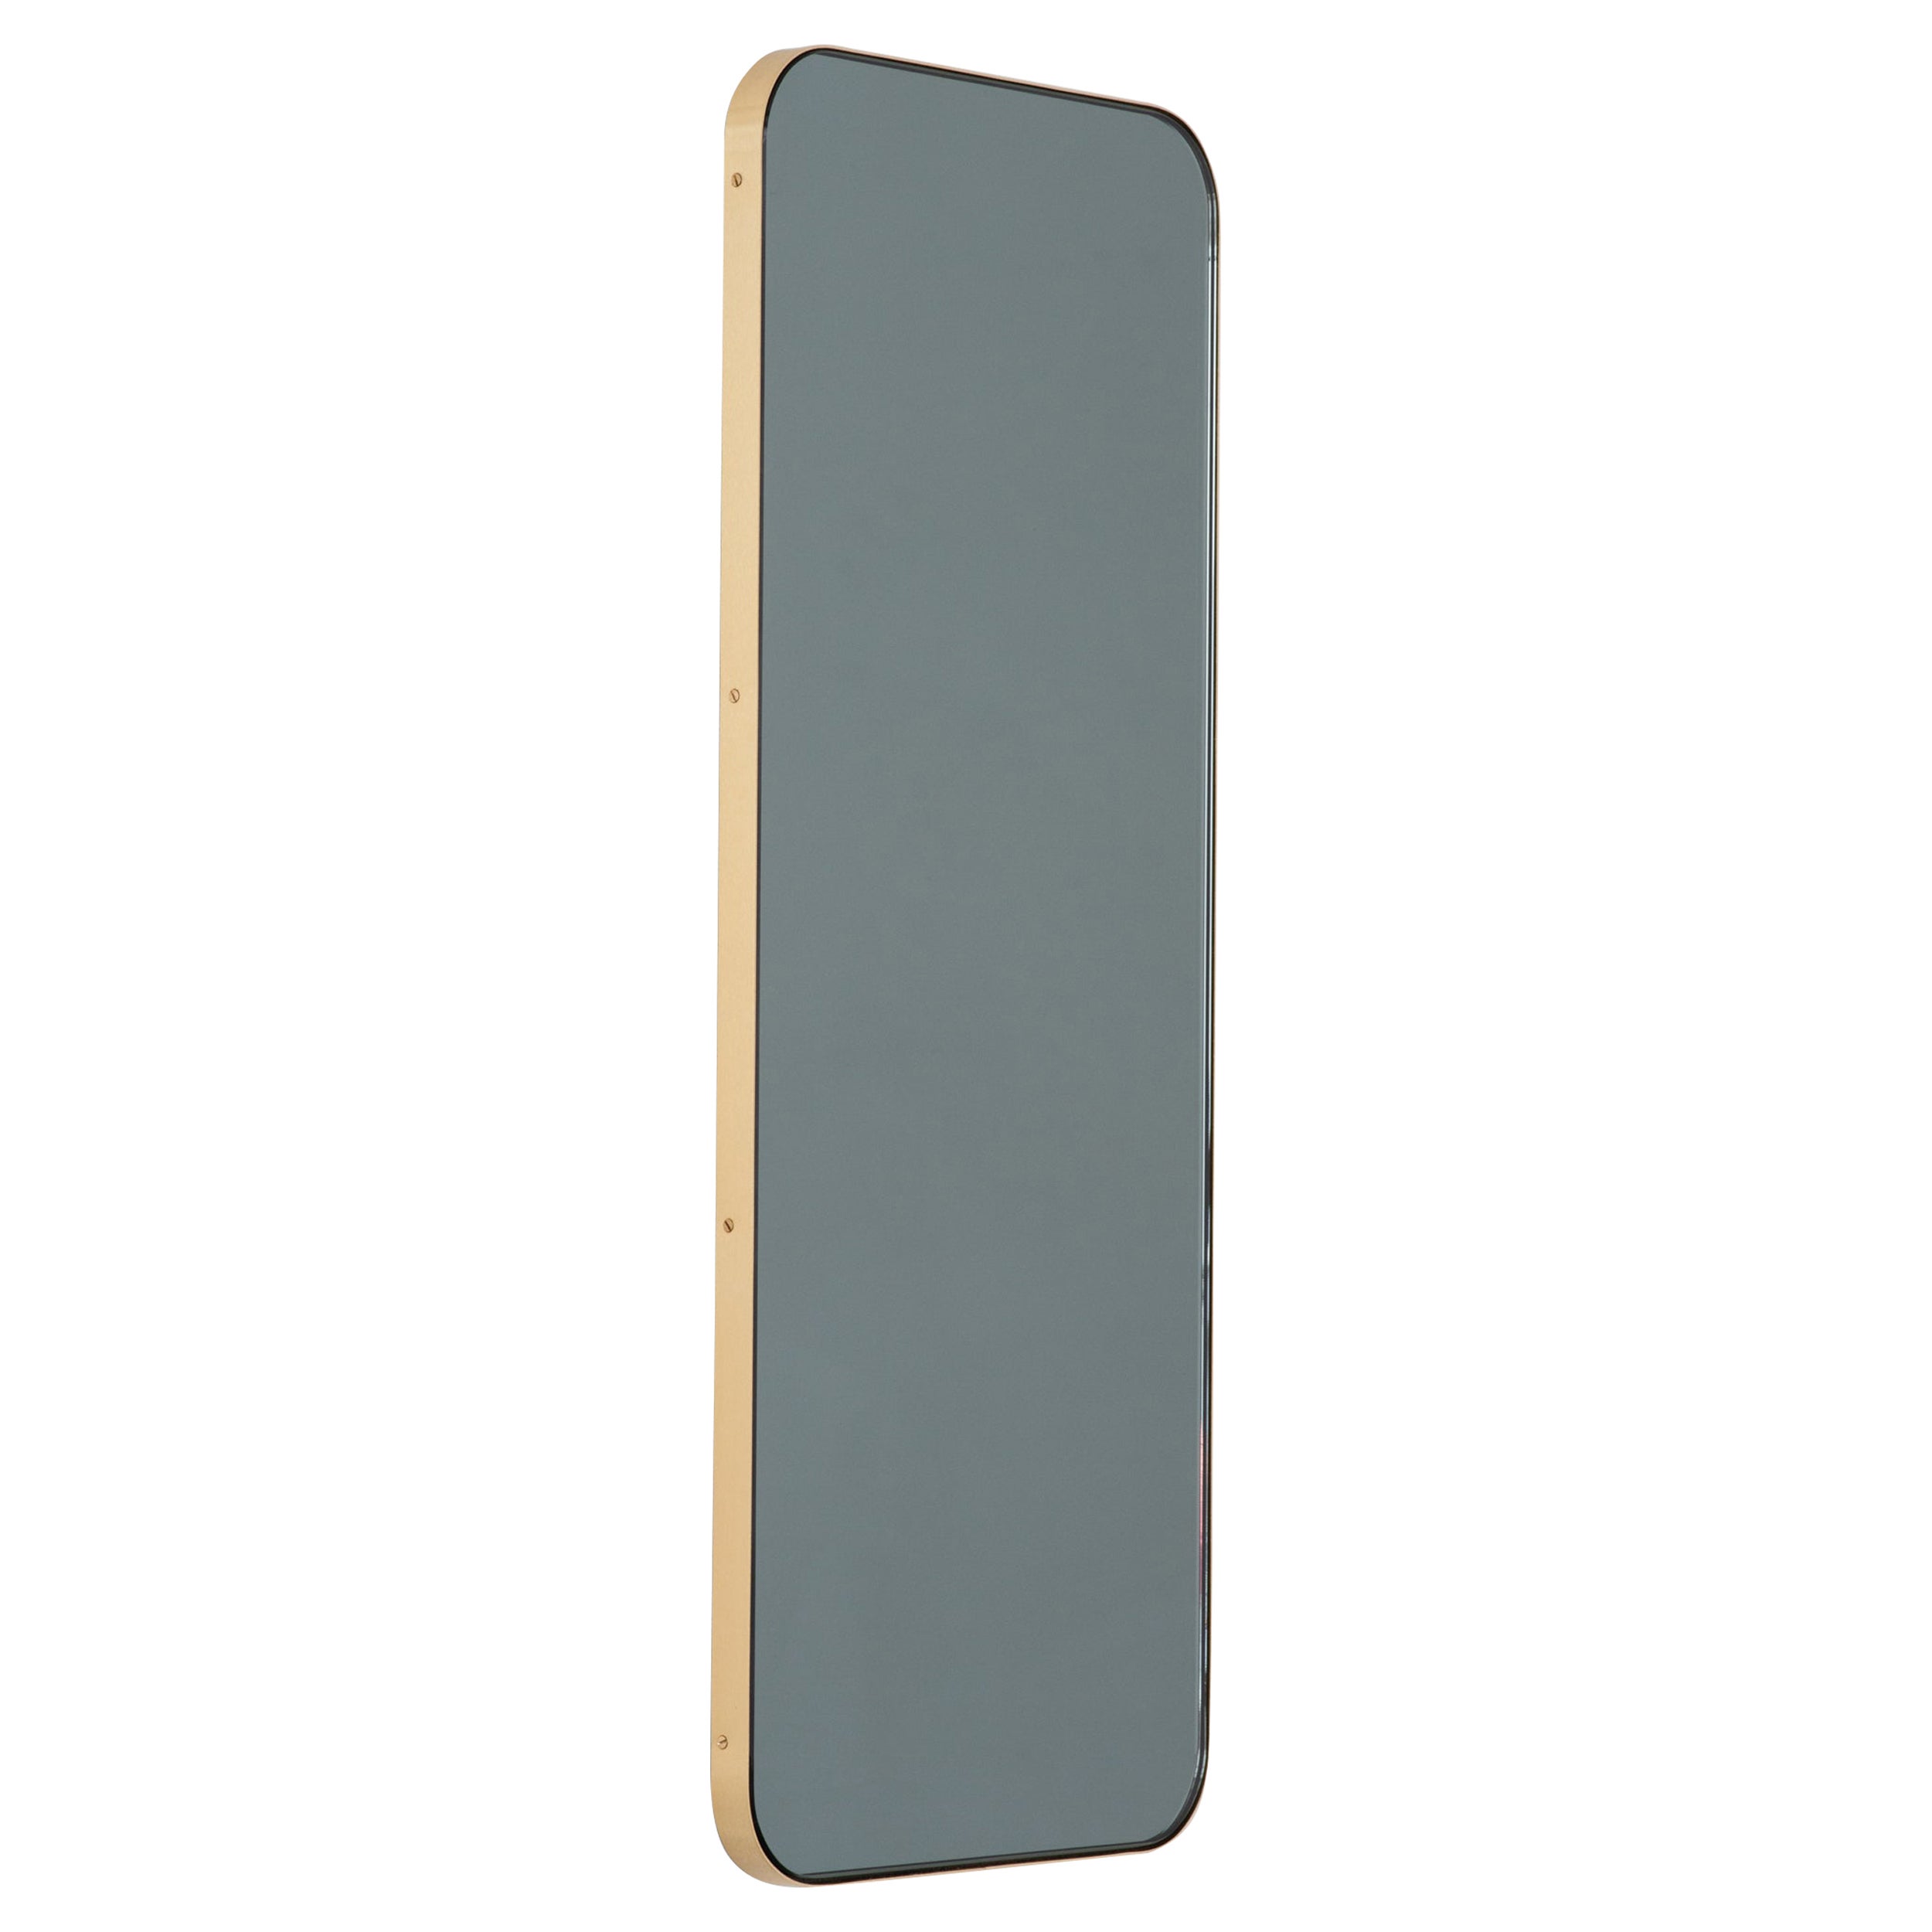 Quadris Black Tinted Rectangular Contemporary Mirror with a Brass Frame, Medium